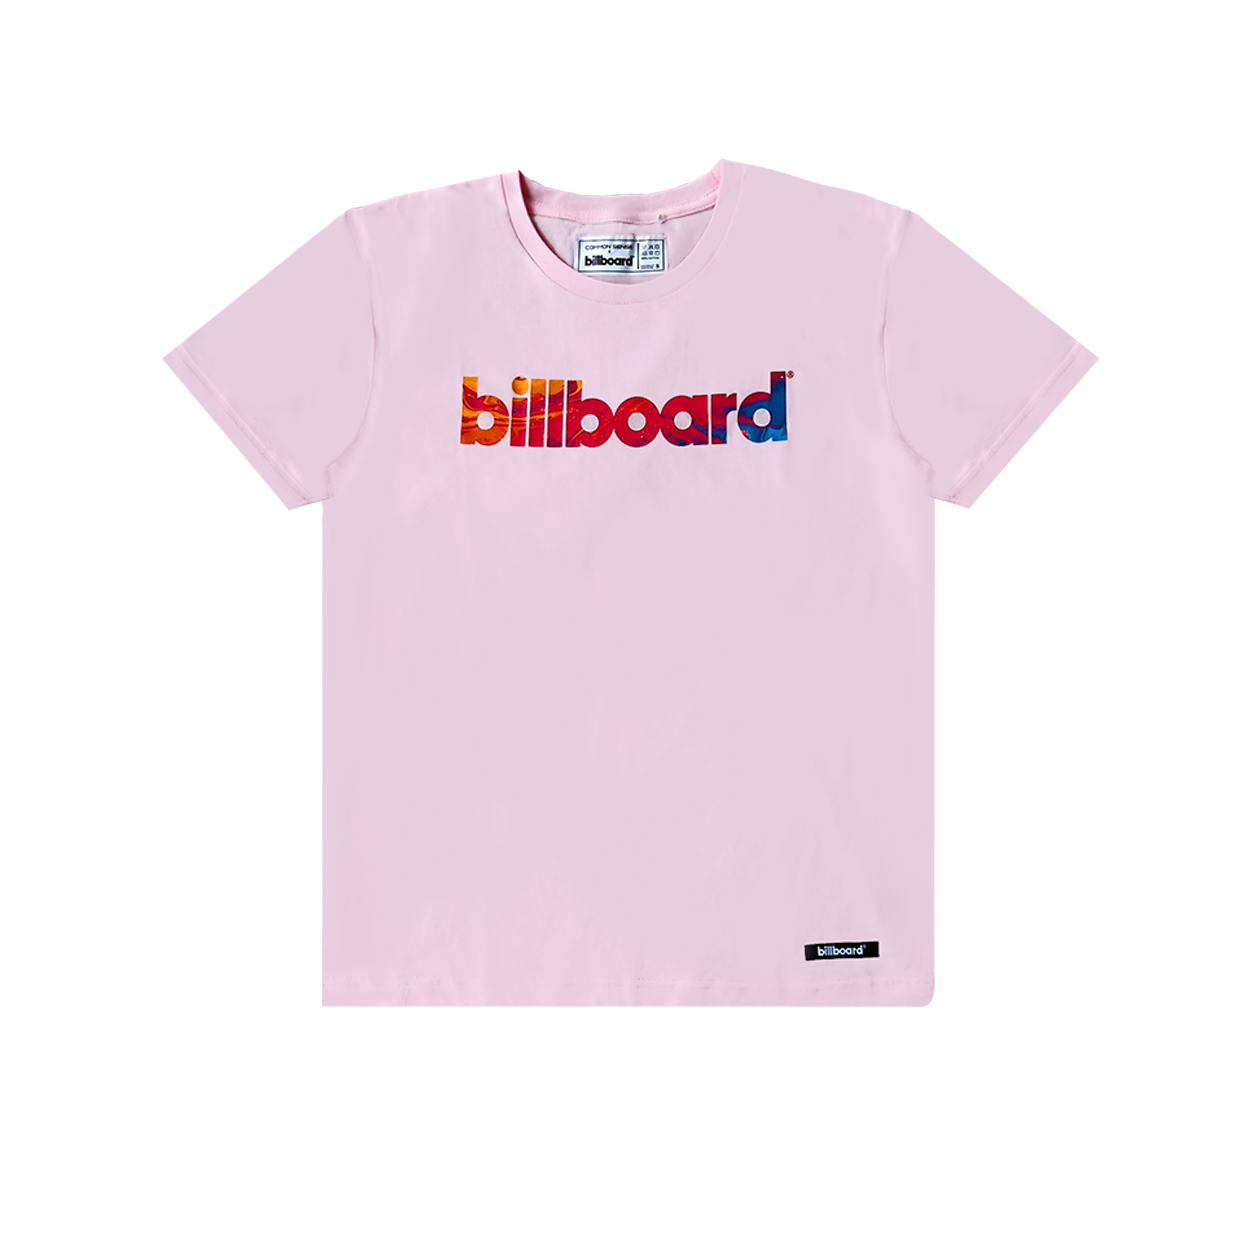 Billboard Unisex Graphic T-Shirt - COMMON SENSE